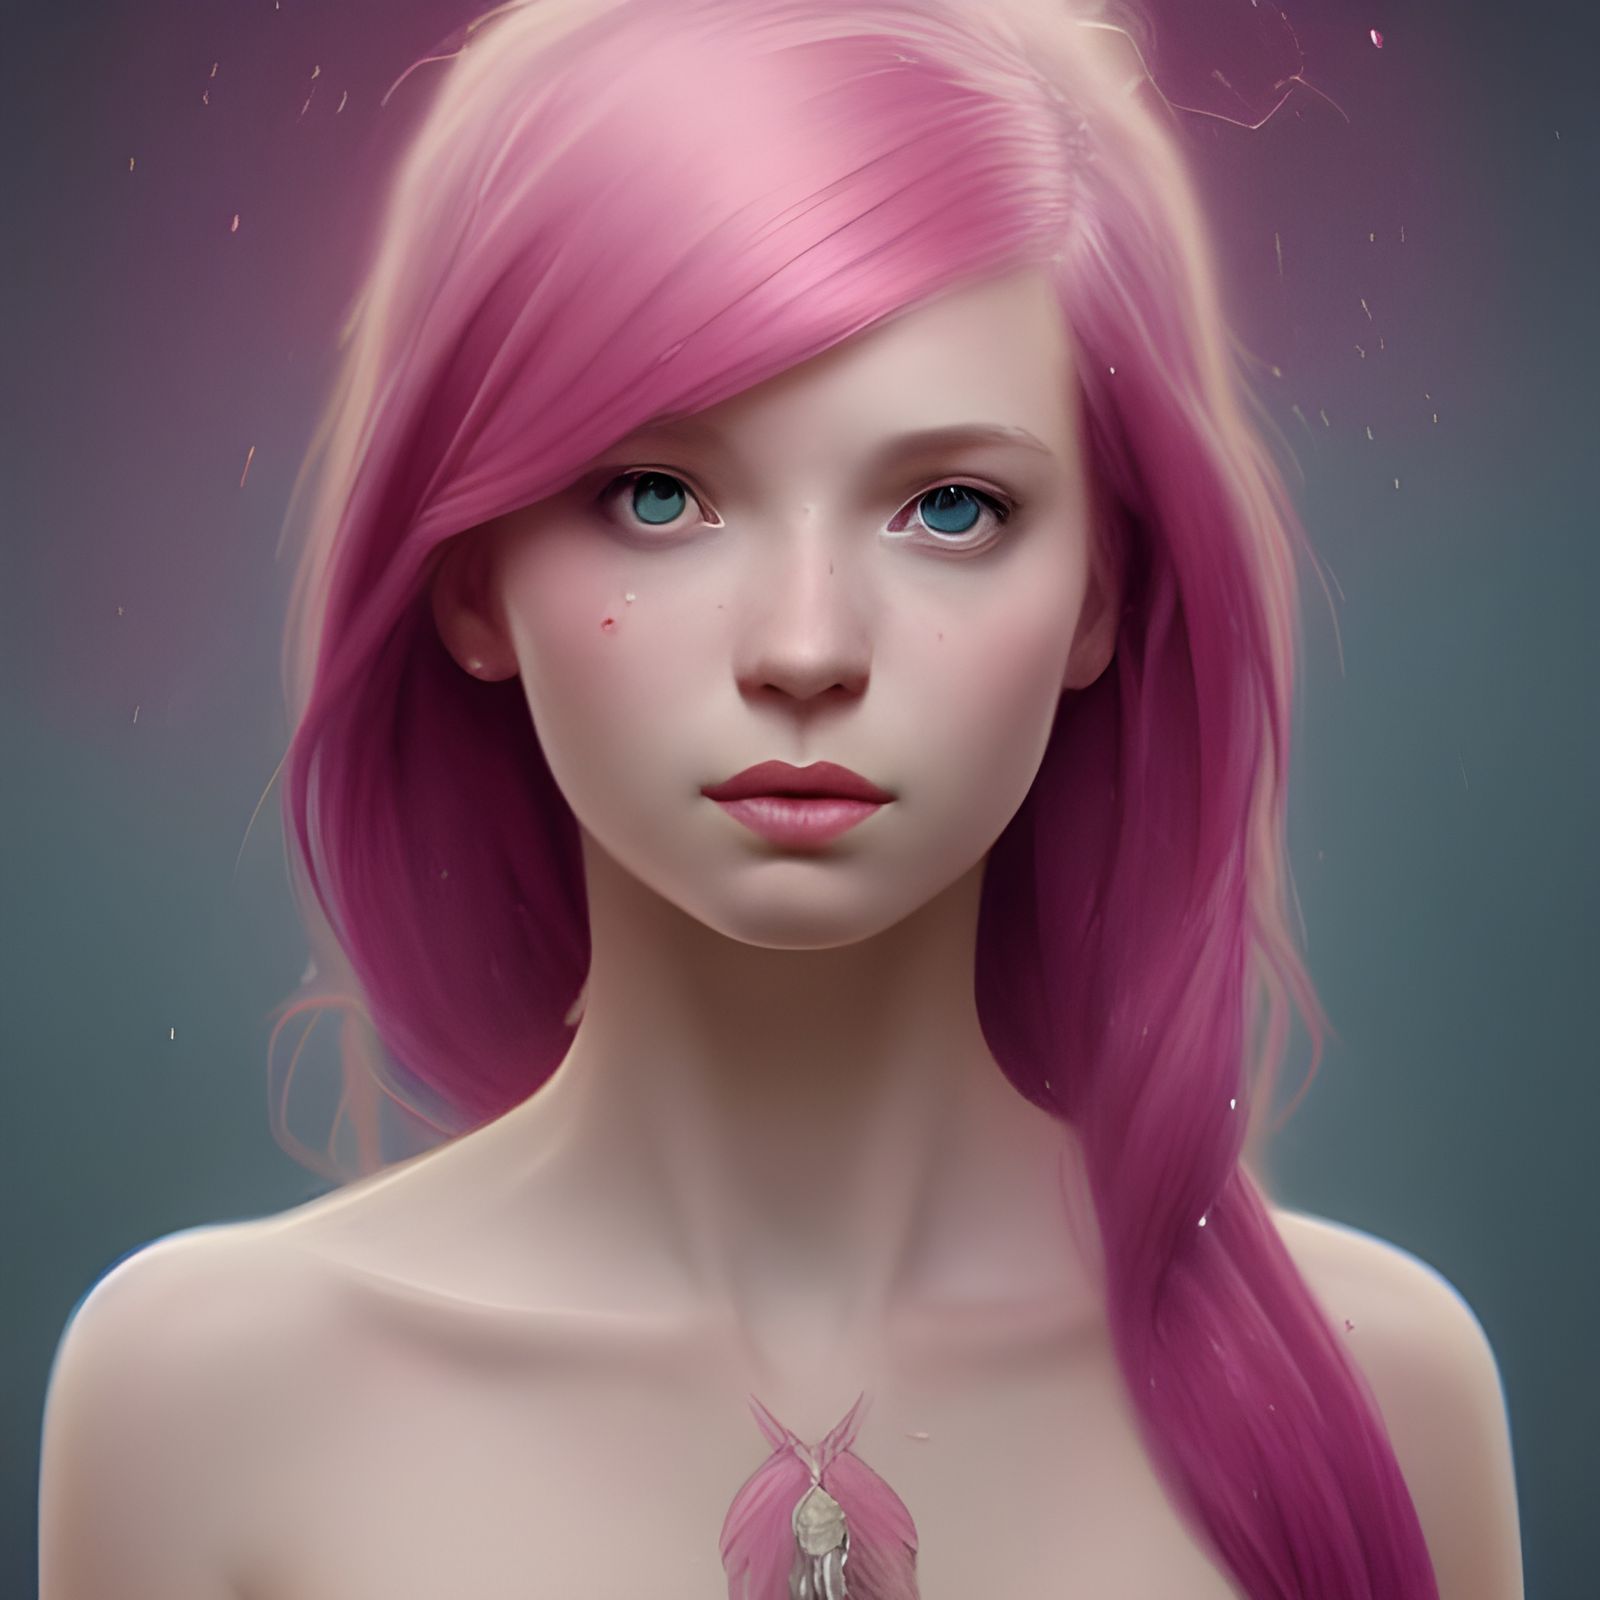 3d Beautiful girl with pink hair - AI Generated Artwork - NightCafe Creator